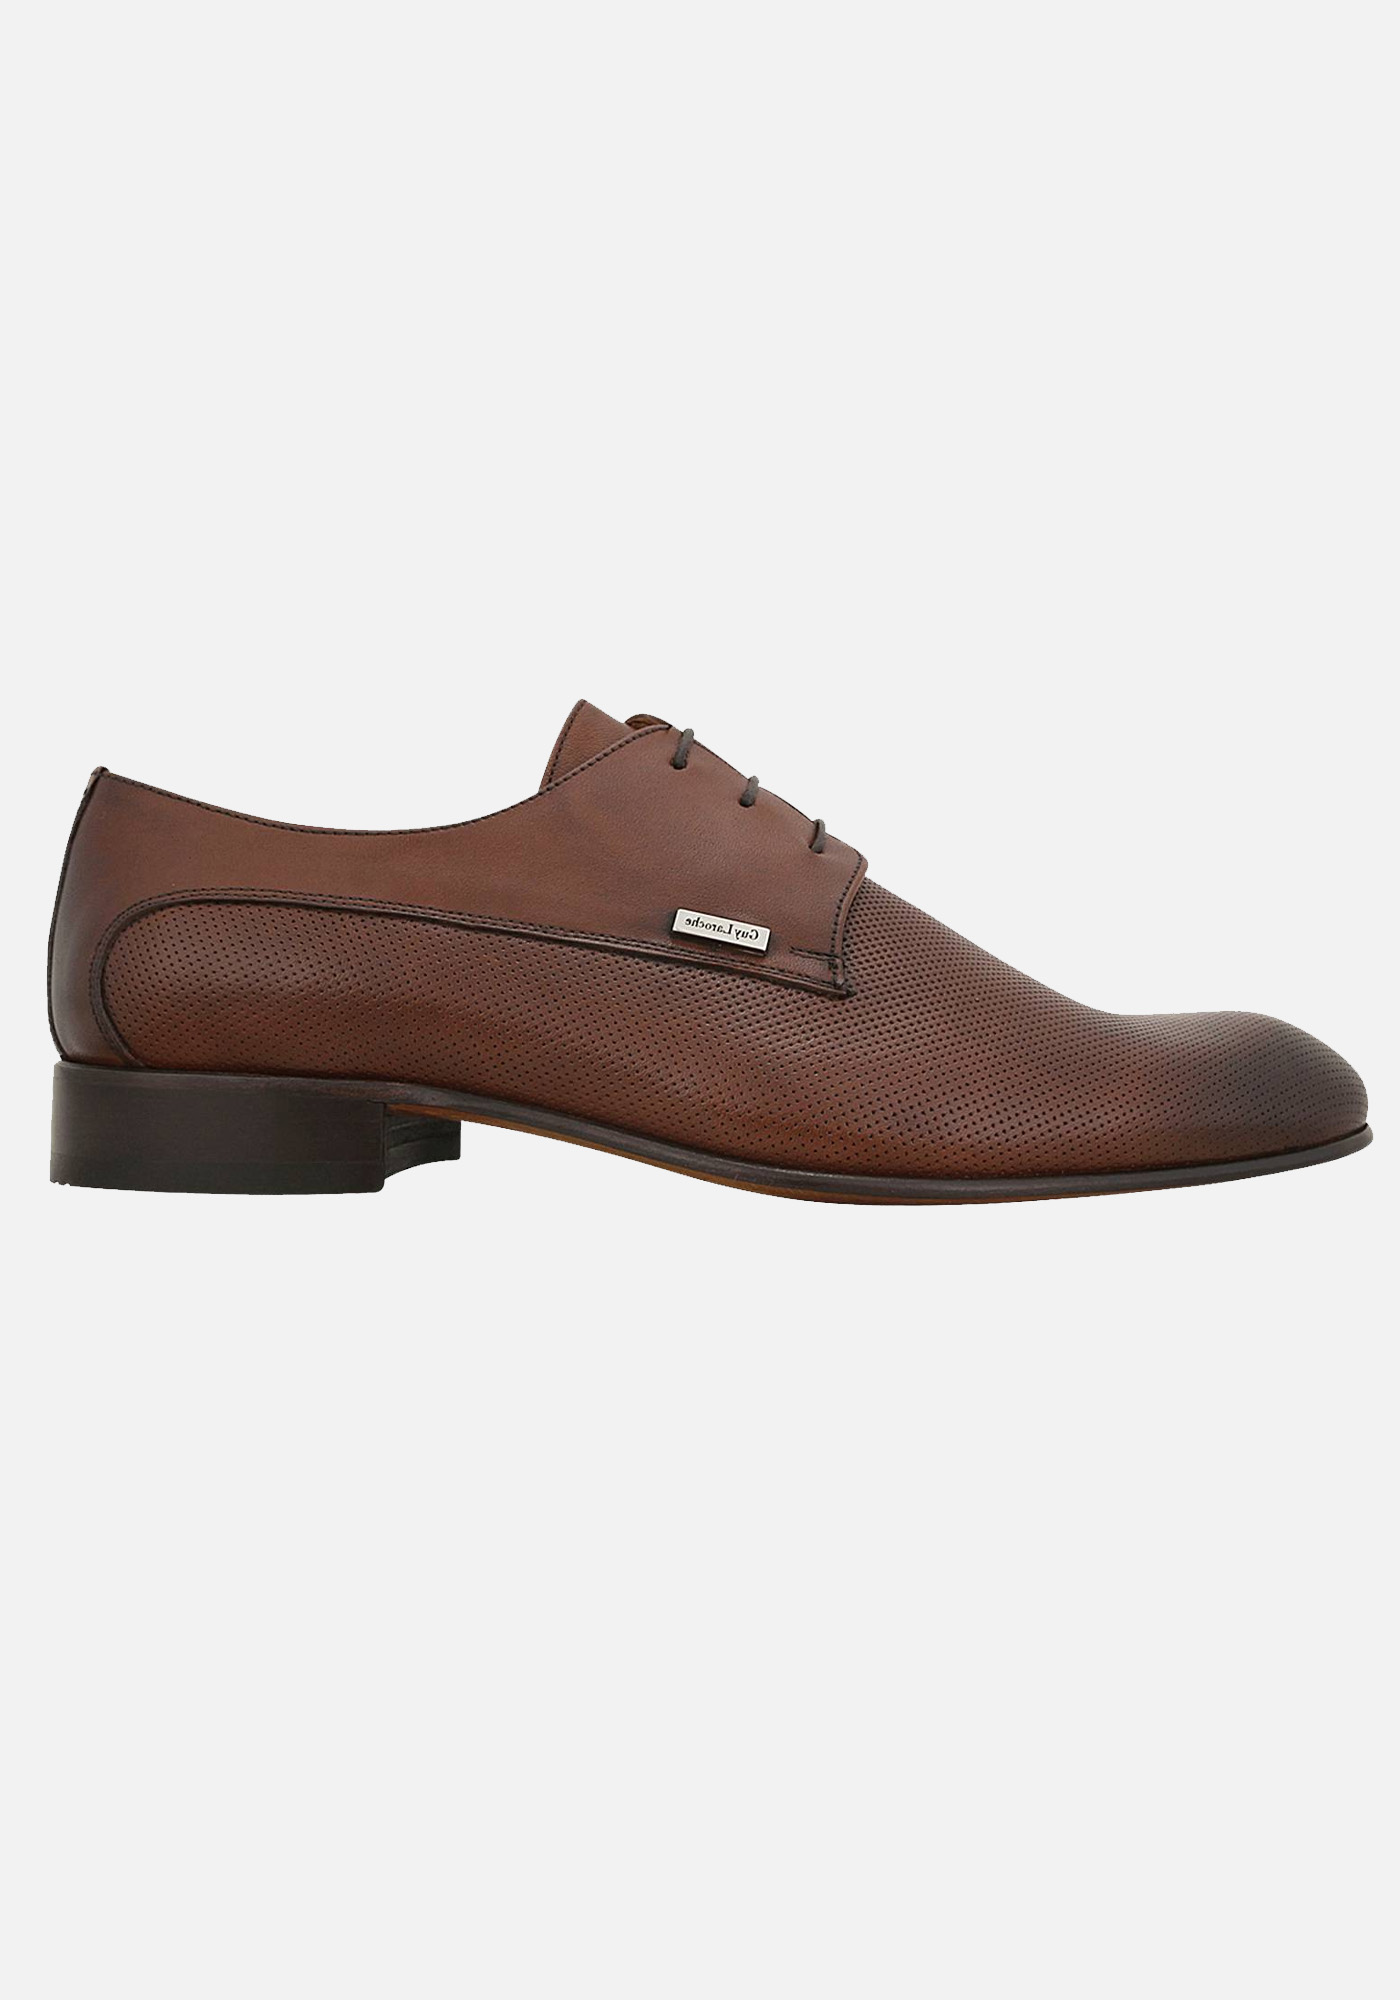 Guy Laroche Δερμάτινα Παπούτσια της σειράς Sarno - GL15604 22 Brown 9382